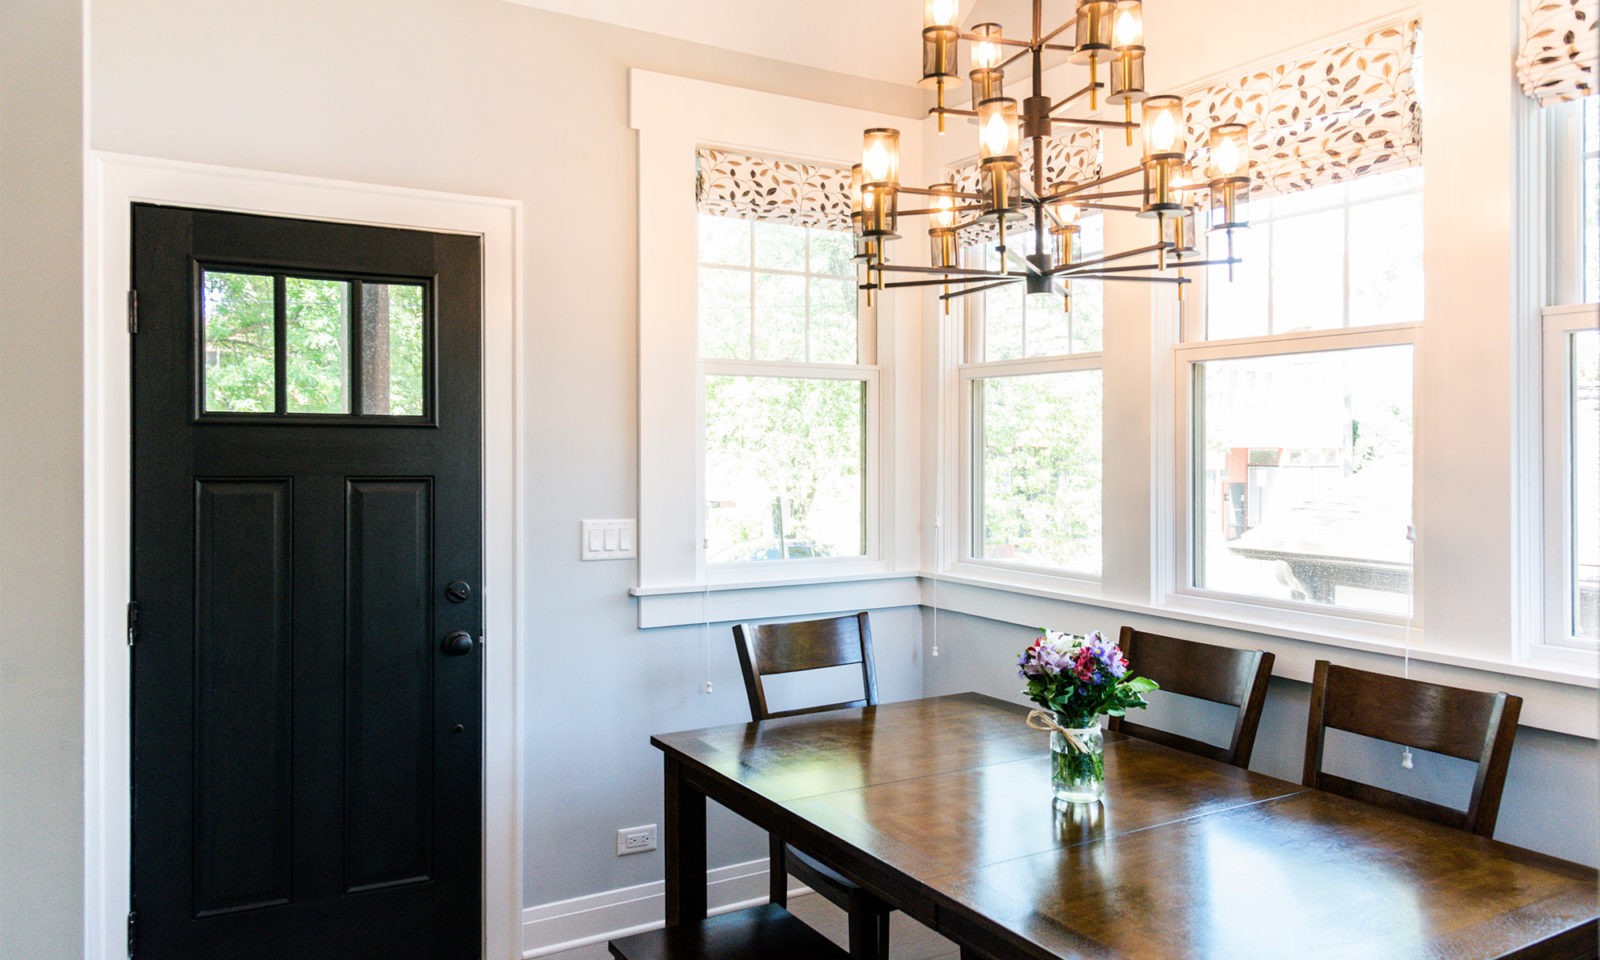 Newly renovated kitchen with bright windows, wooden kitchen table, dark statement door, and wooden chandelier